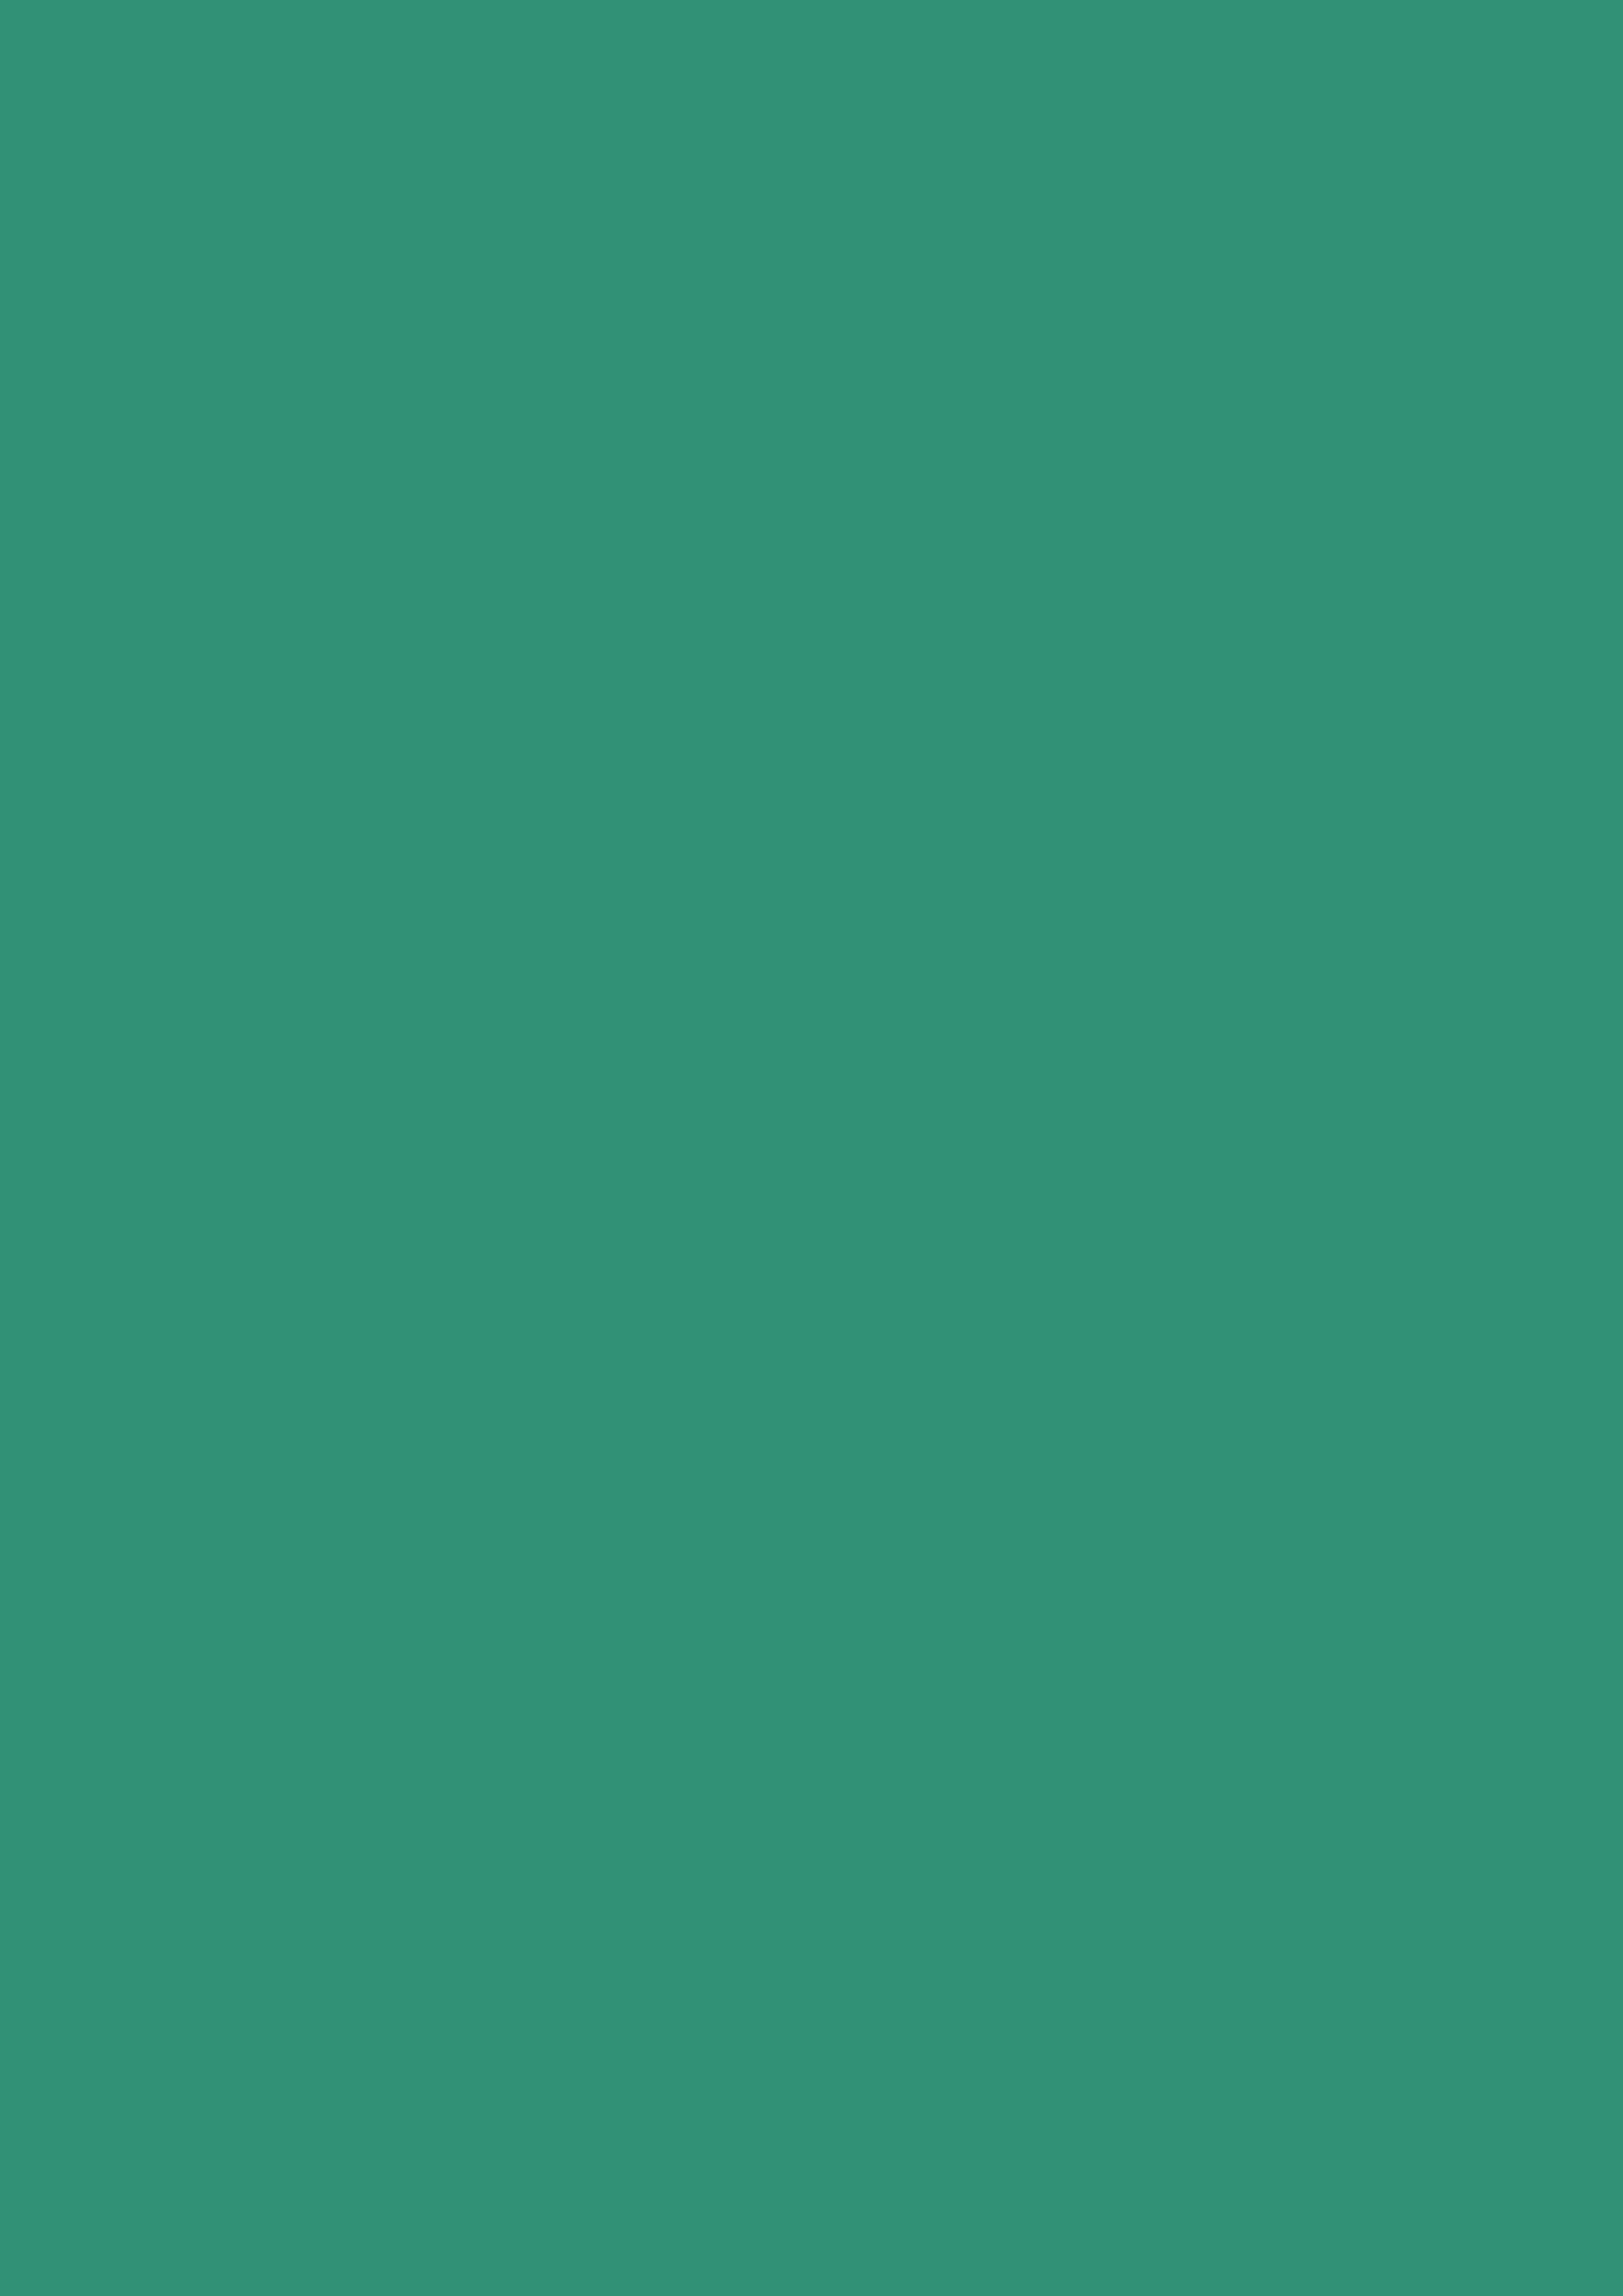 2480x3508 Illuminating Emerald Solid Color Background